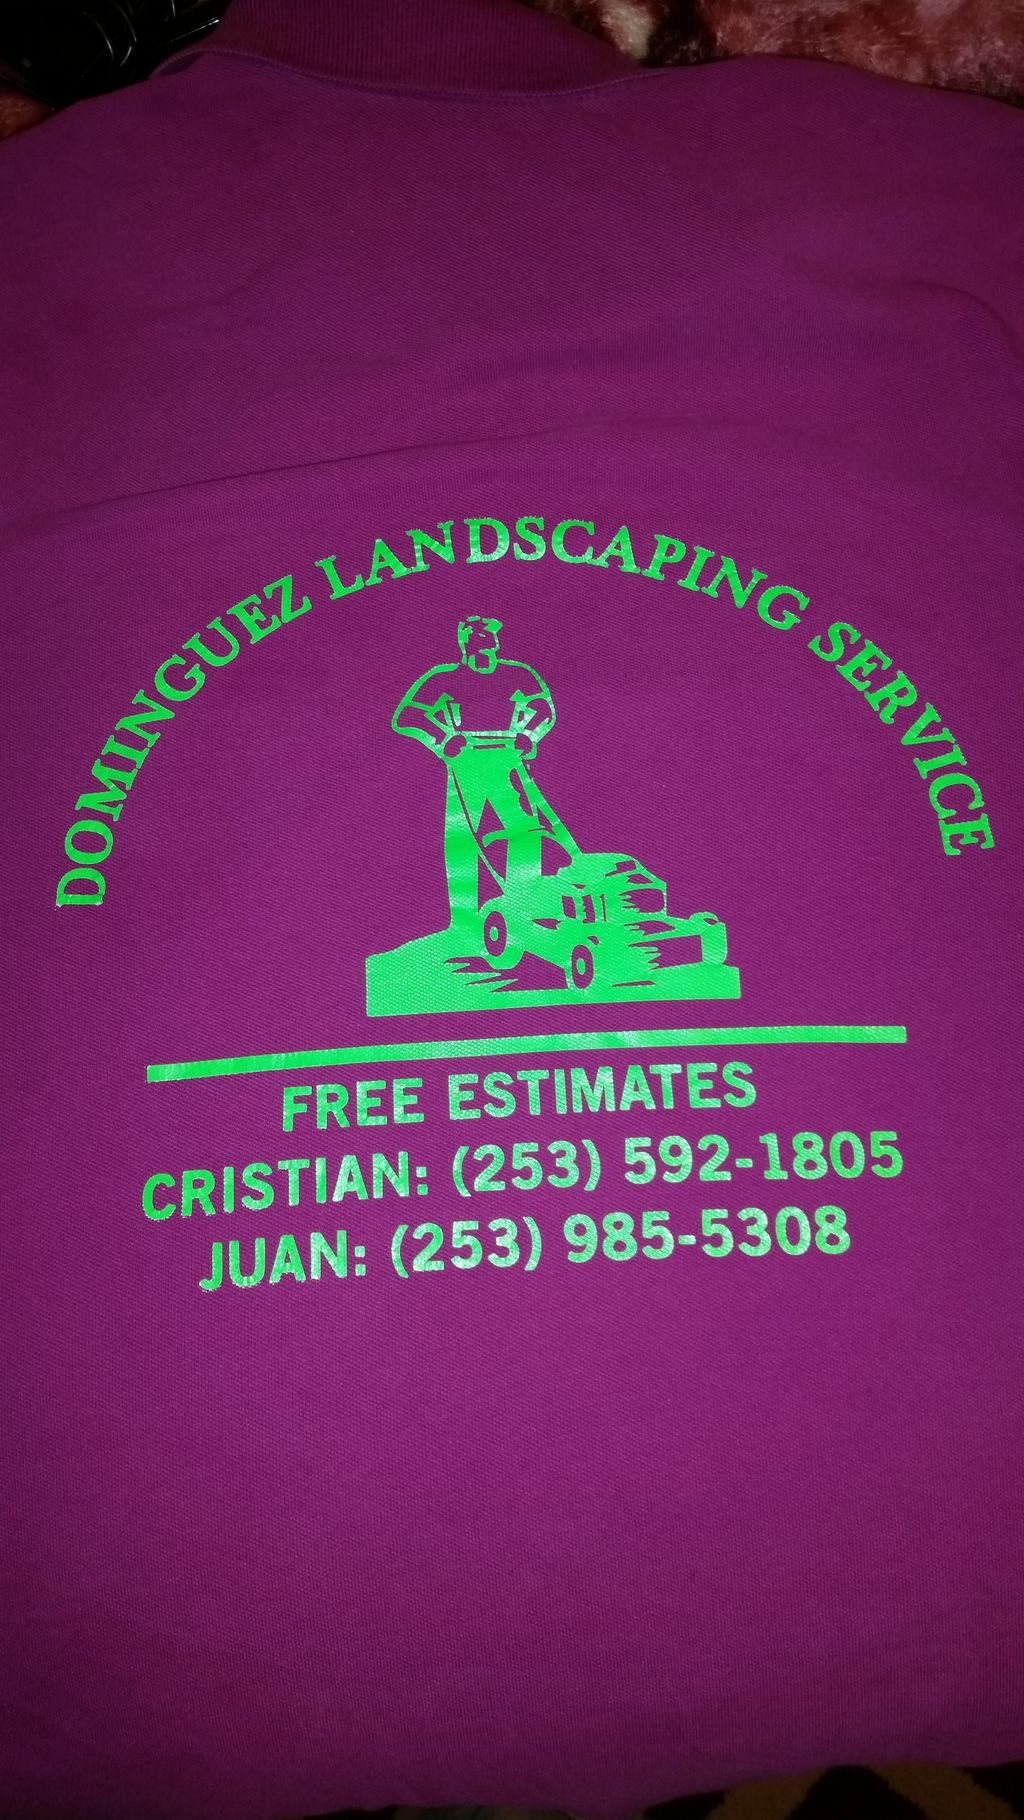 Dominguez Landscaping  Service